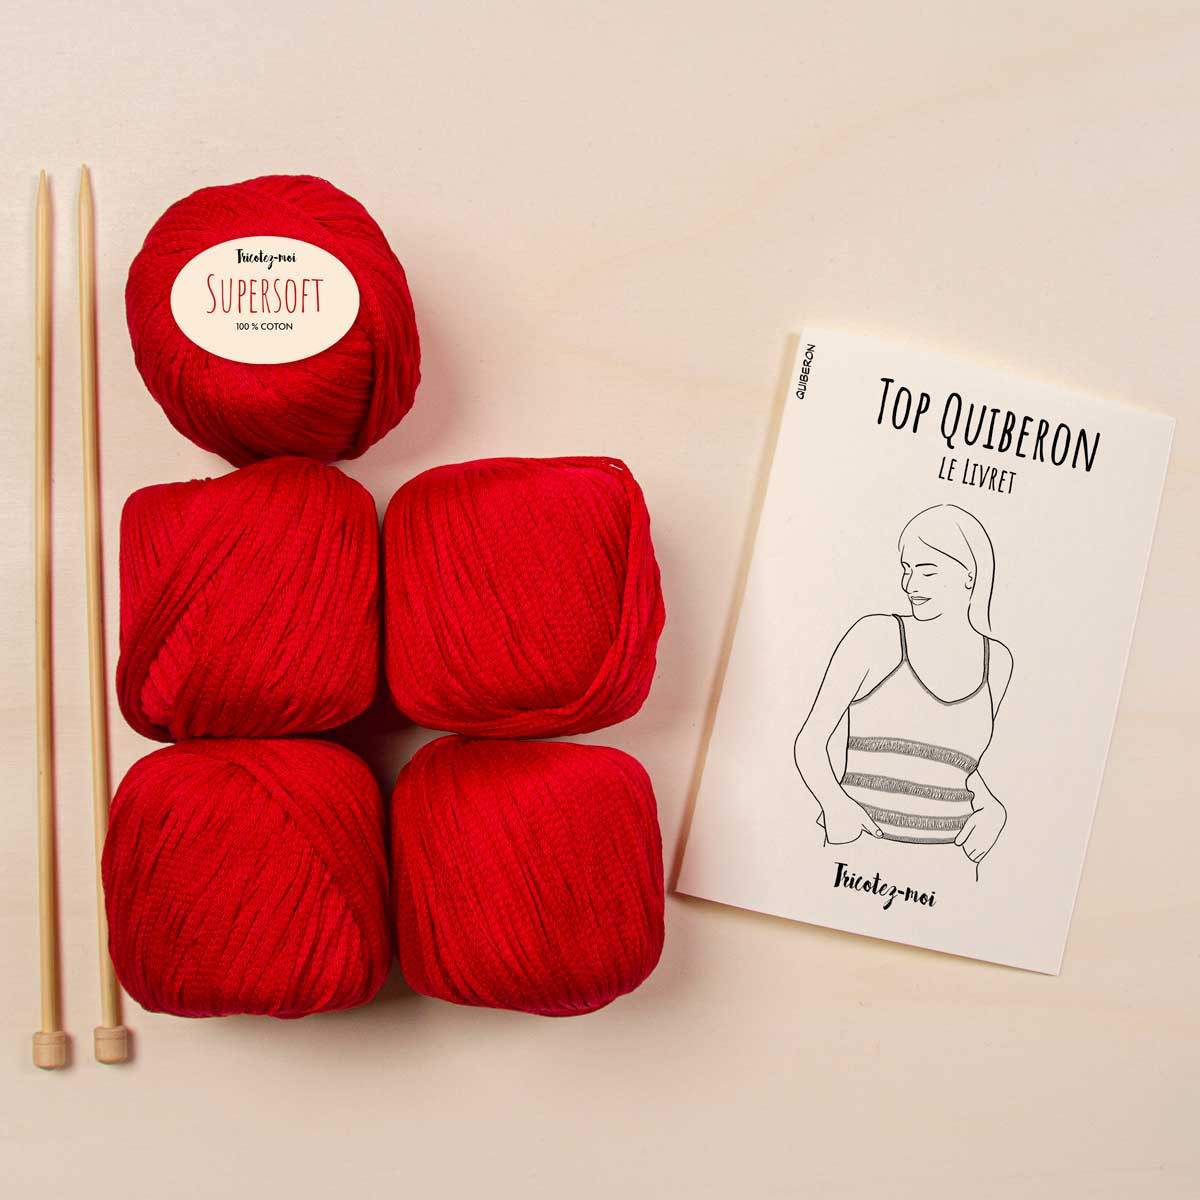 Quiberon Top to knit